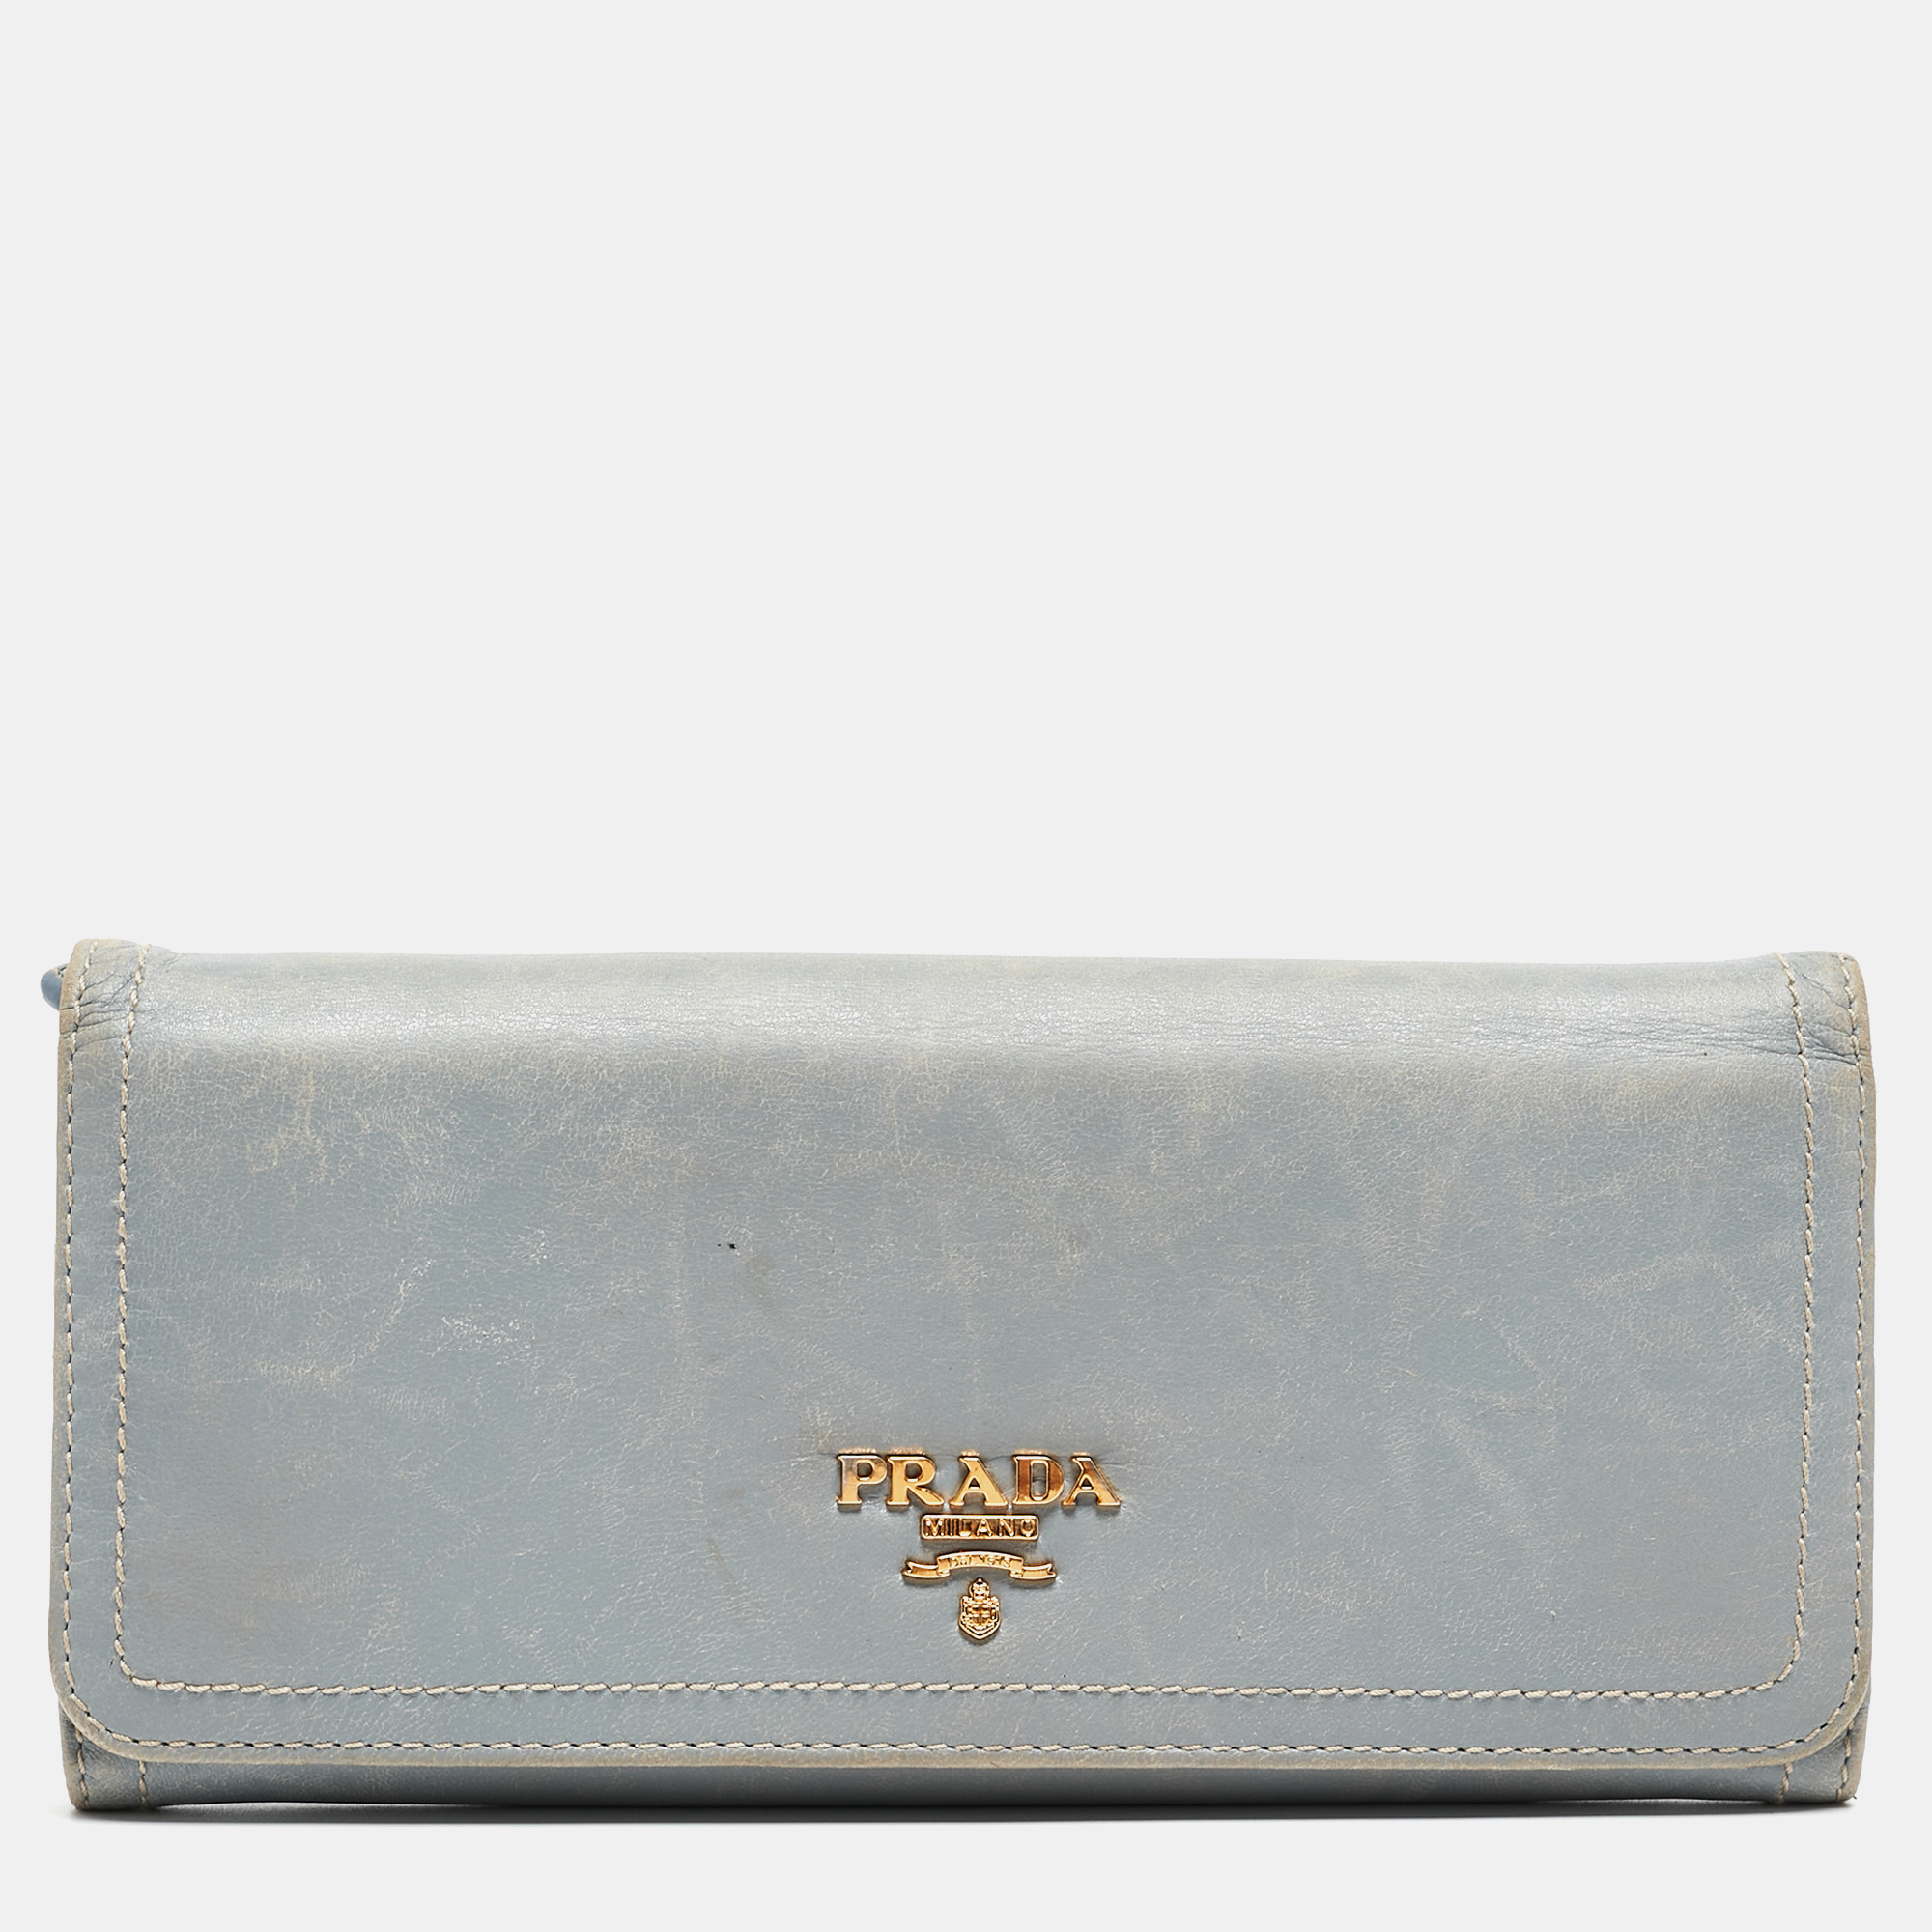 Prada light blue leather logo flap continental wallet